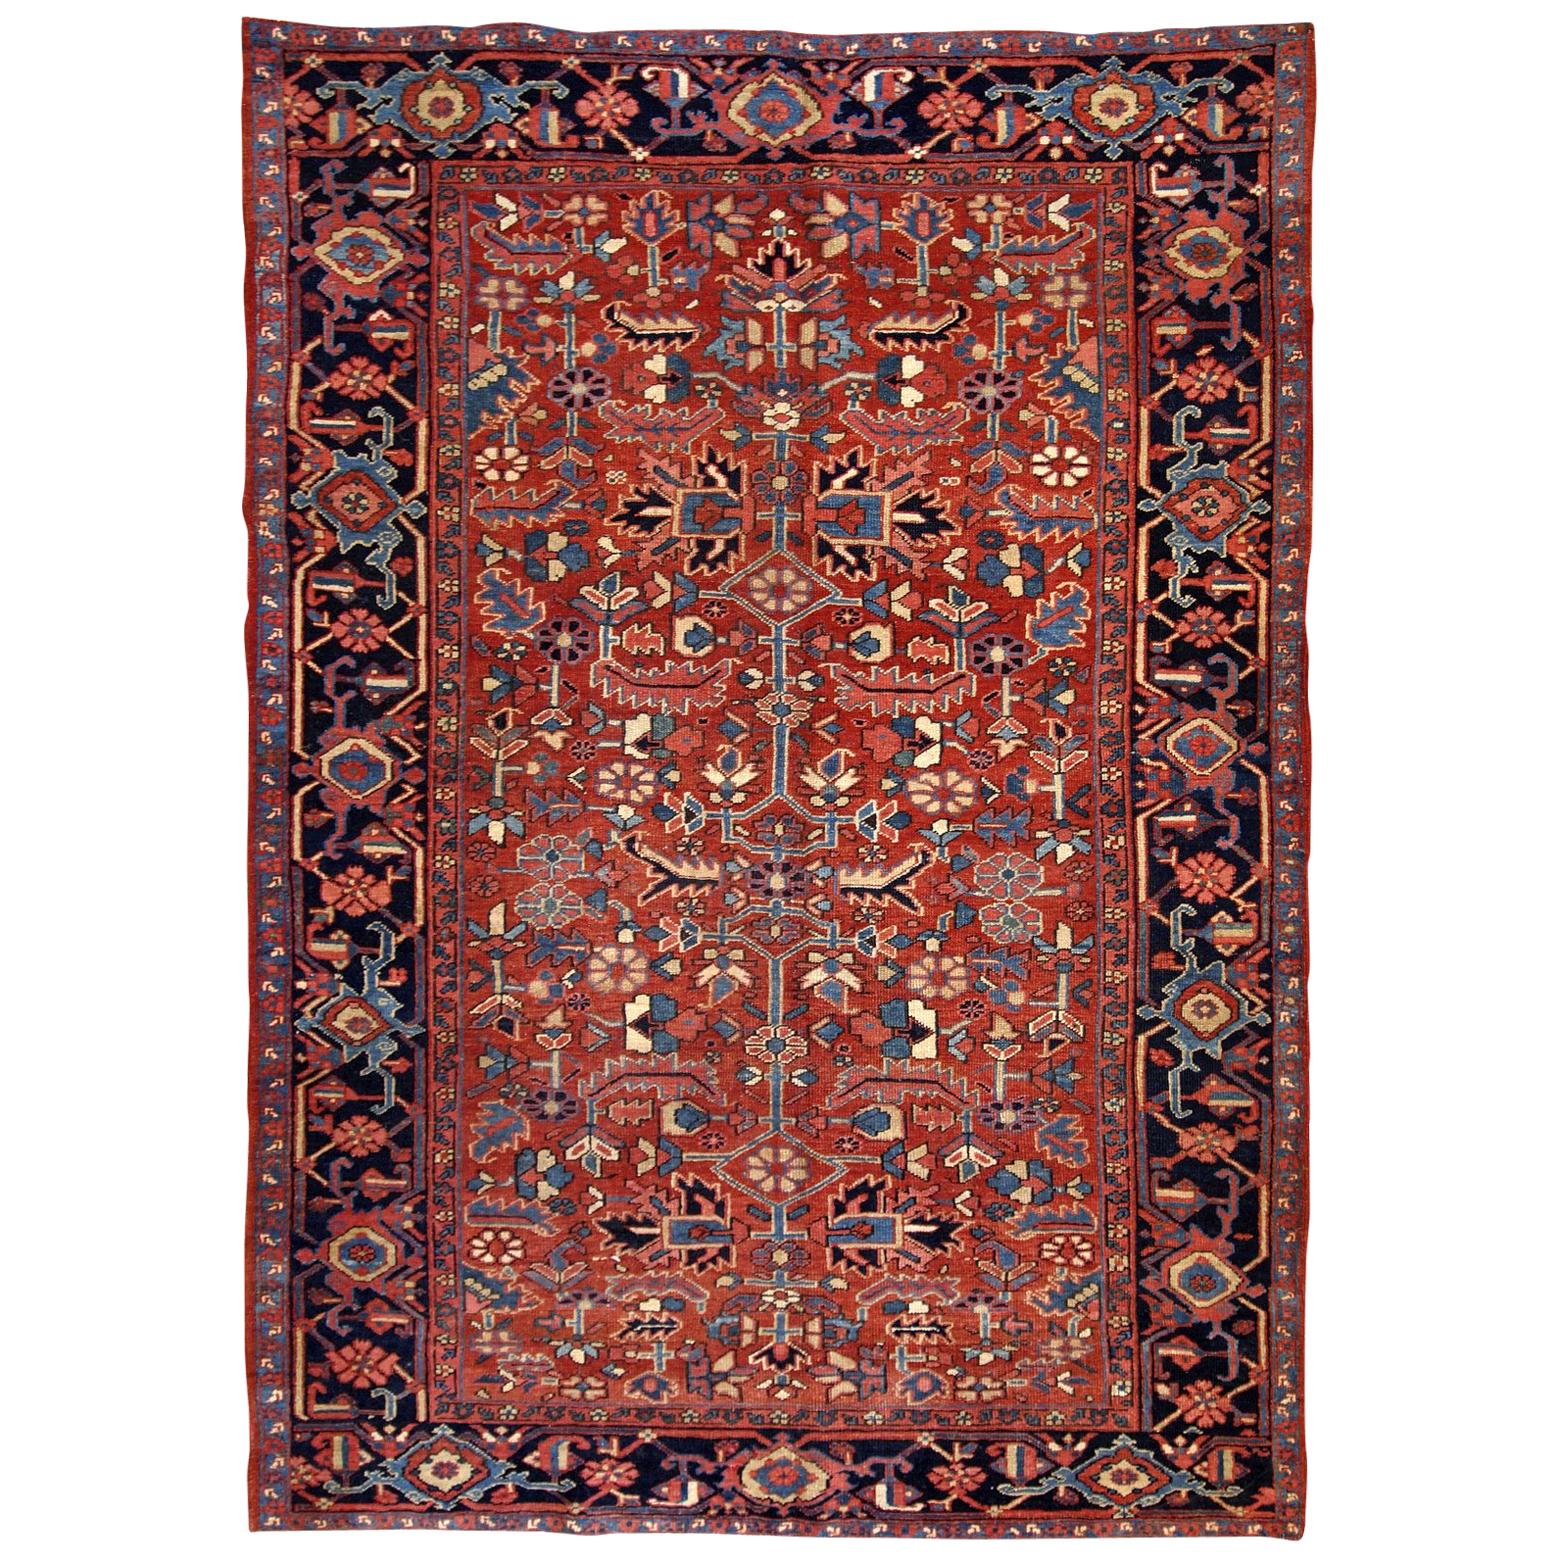 Handmade antique Heriz style rug, 1900s, 1B713